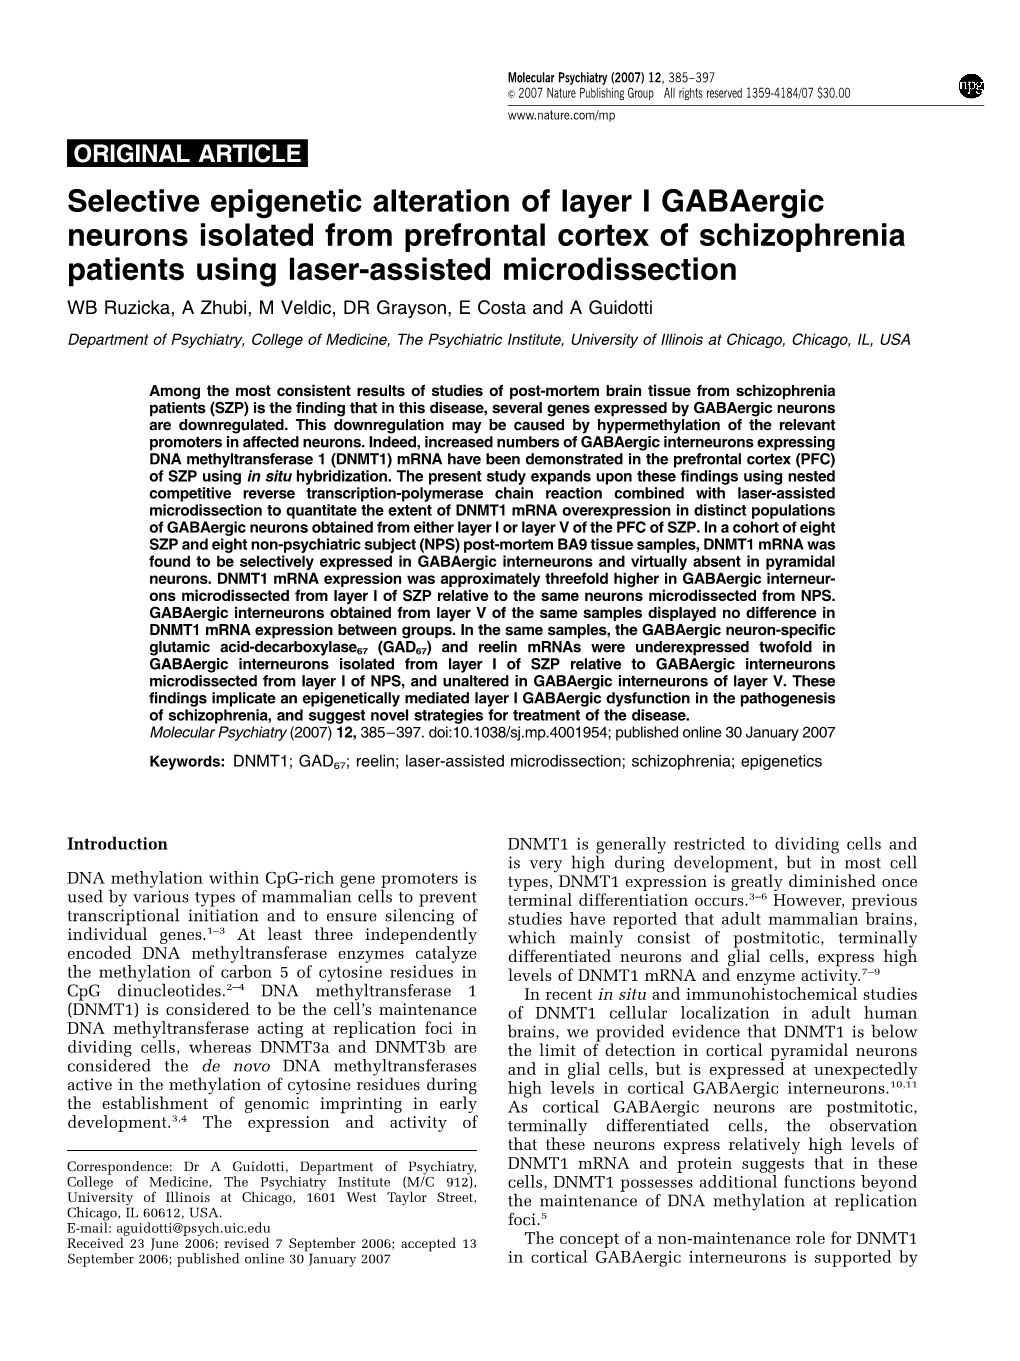 Selective Epigenetic Alteration of Layer I Gabaergic Neurons Isolated From